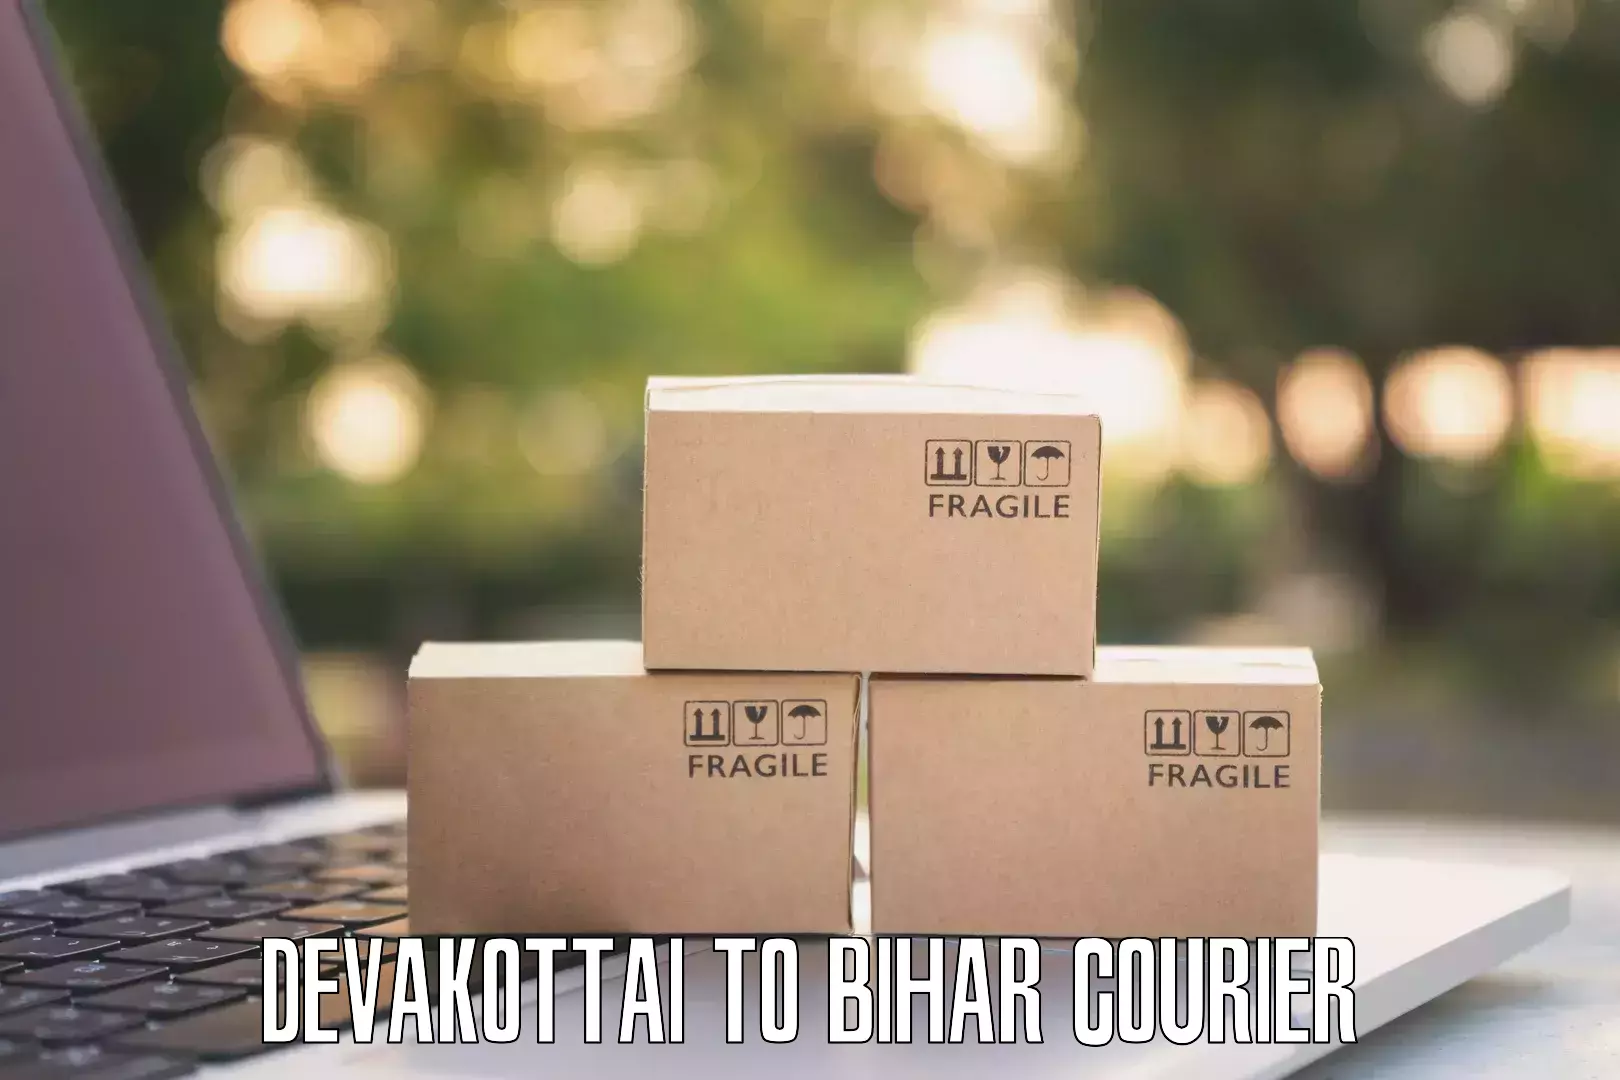 Quick dispatch service Devakottai to Raxaul